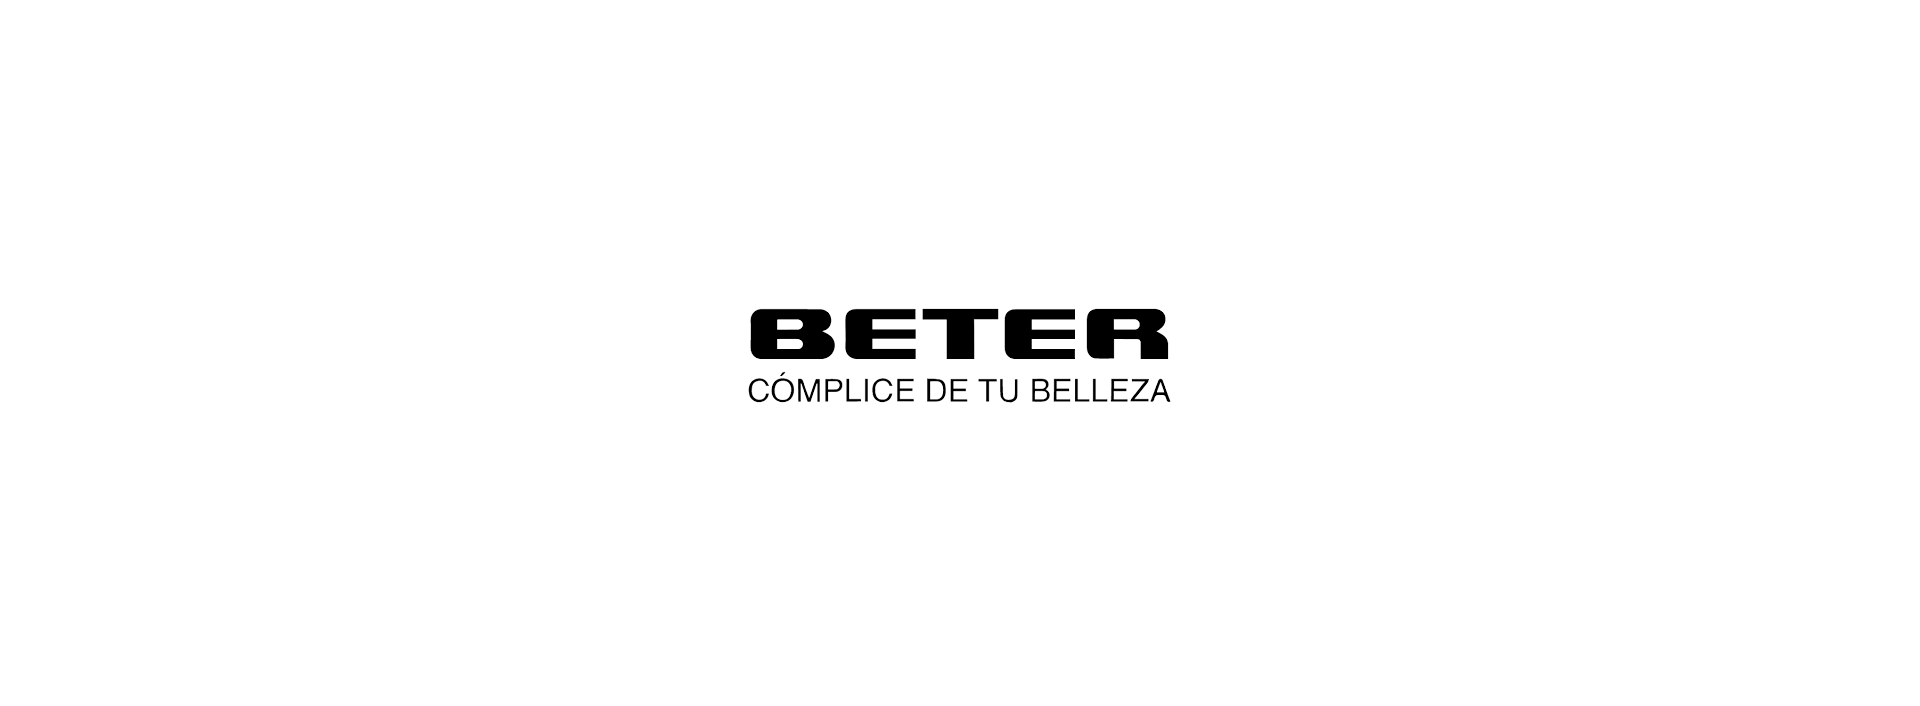 BETER